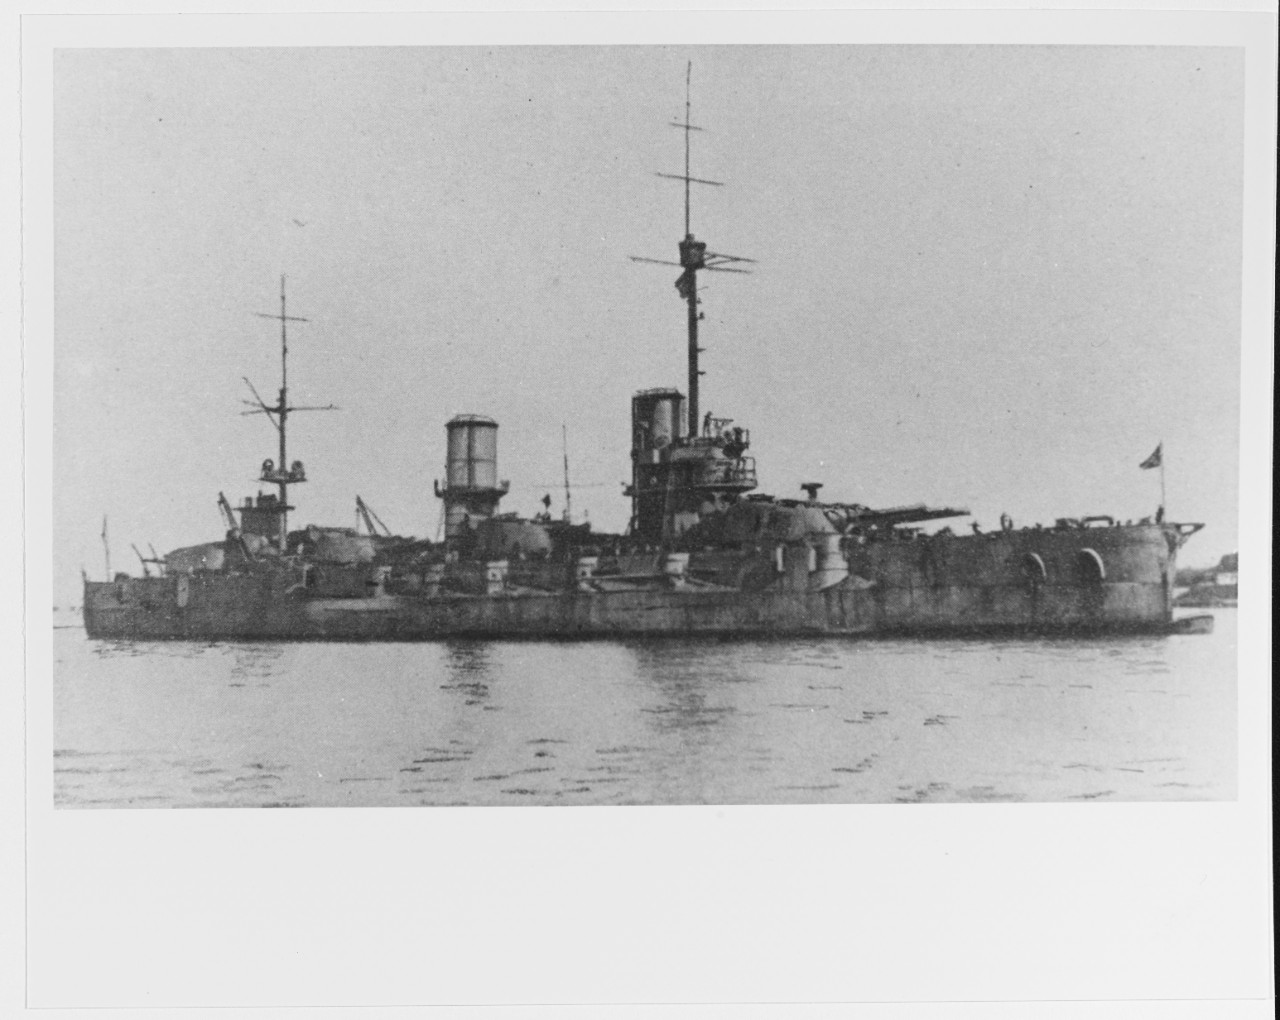 GENERAL ALEKSEEV (Russian battleship, 1914-1936)